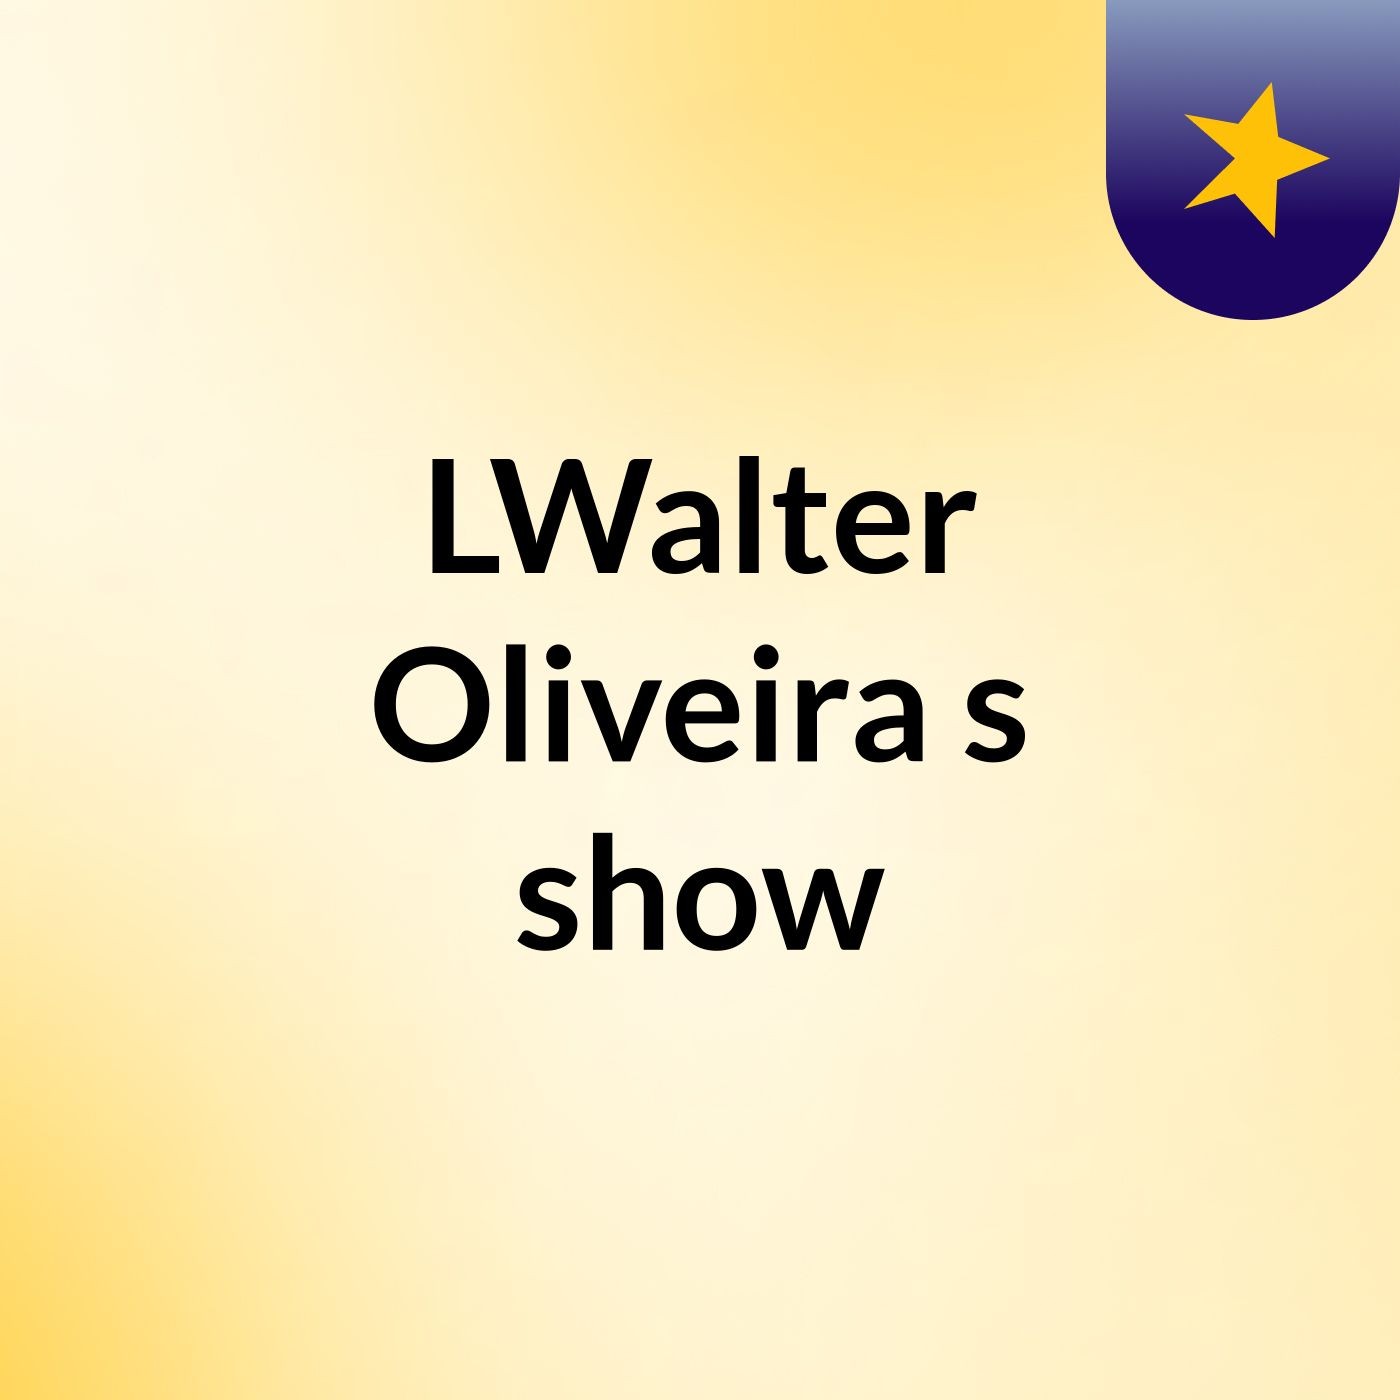 LWalter Oliveira's show